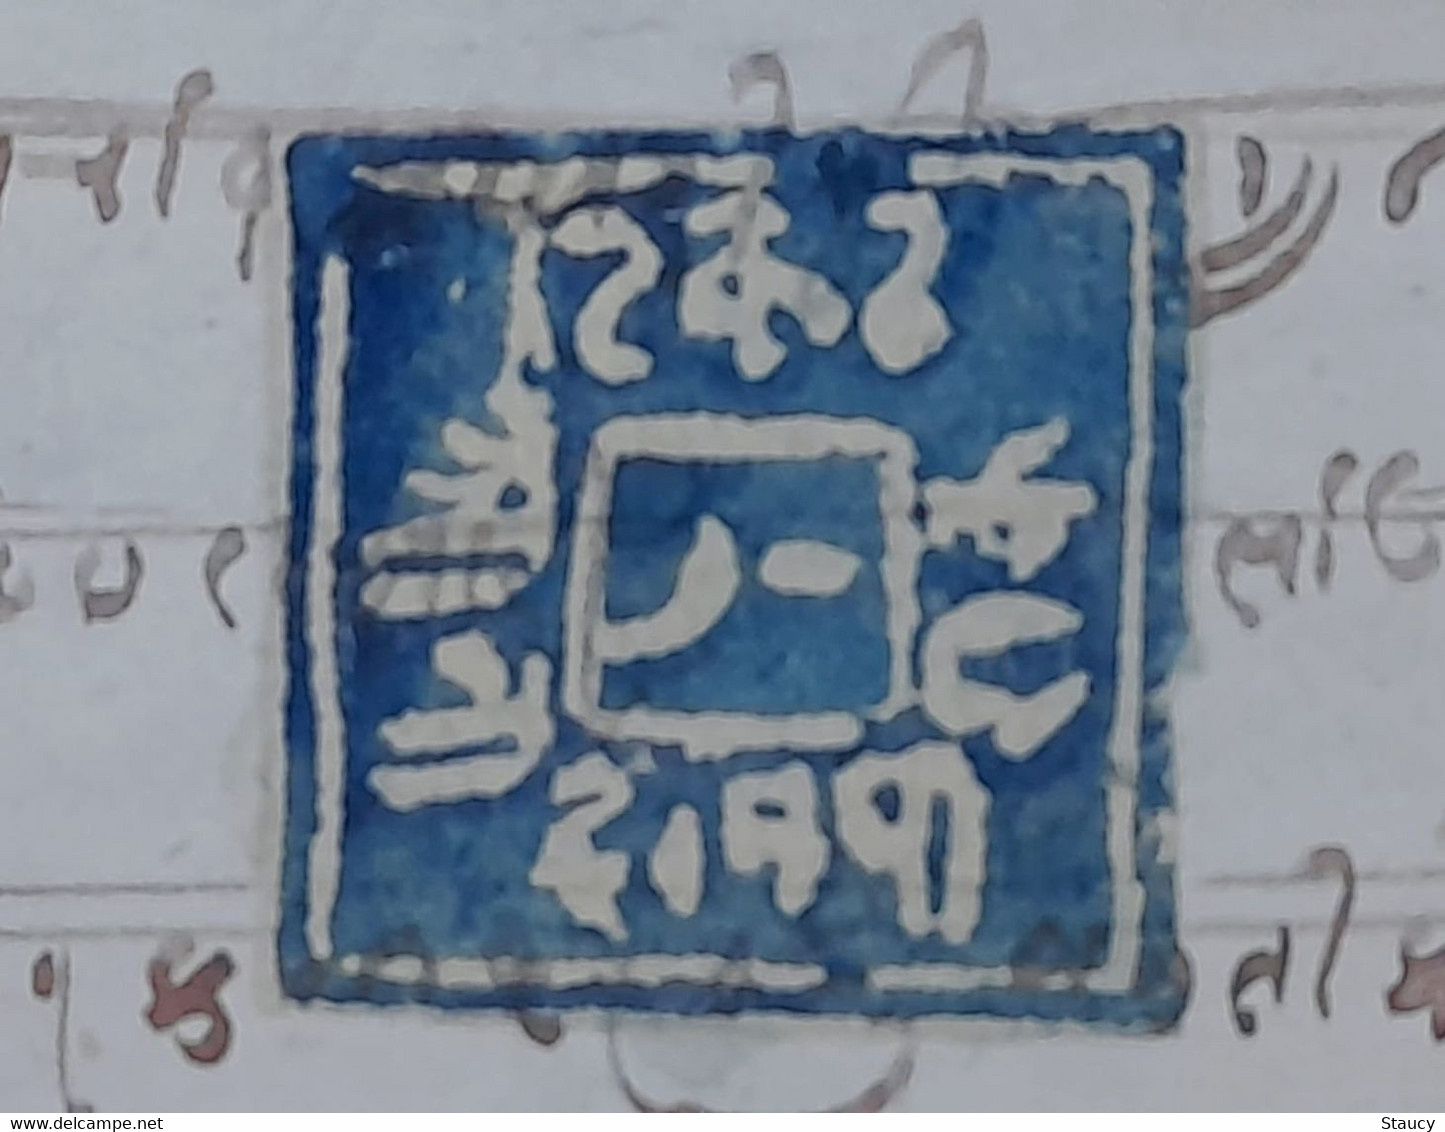 INDIA DATIA DUTTIA STATE One Anna FISCAL / REVENUE Stamp With FOUR MARGINS Used On DOCUMENT Ex.Rare - Datia